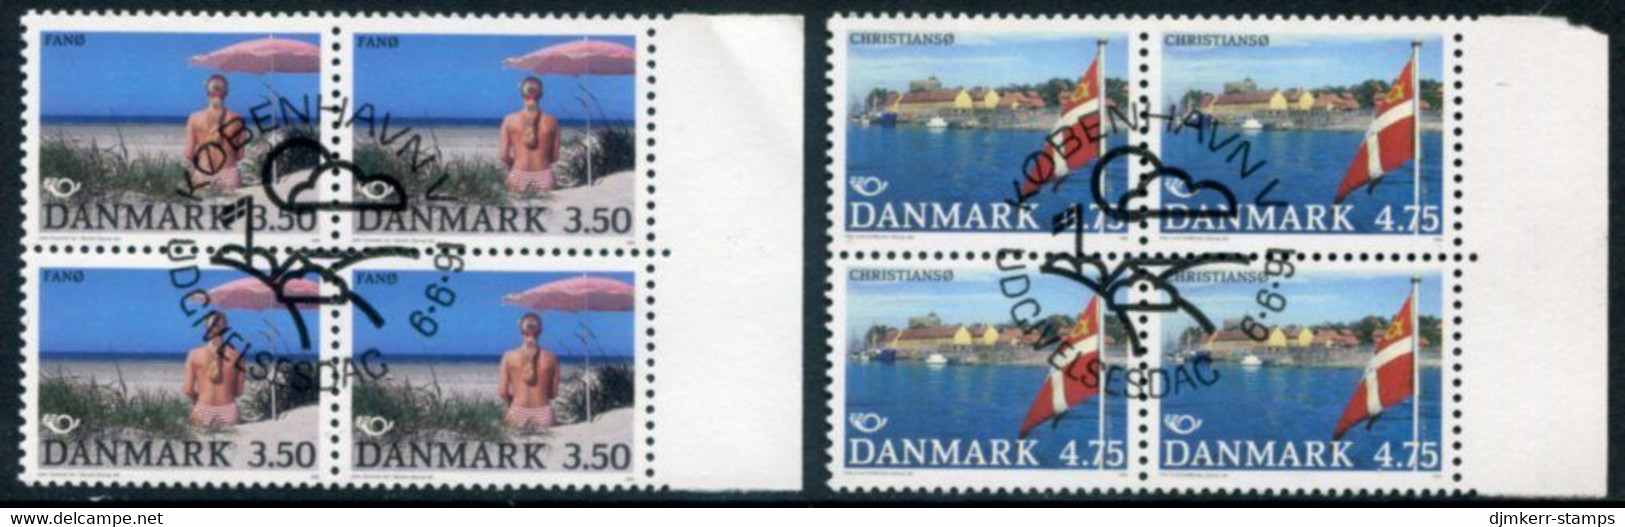 DENMARK 1991 Tourism. Blocks Of 4 Used.   Michel 1003-04 - Usati